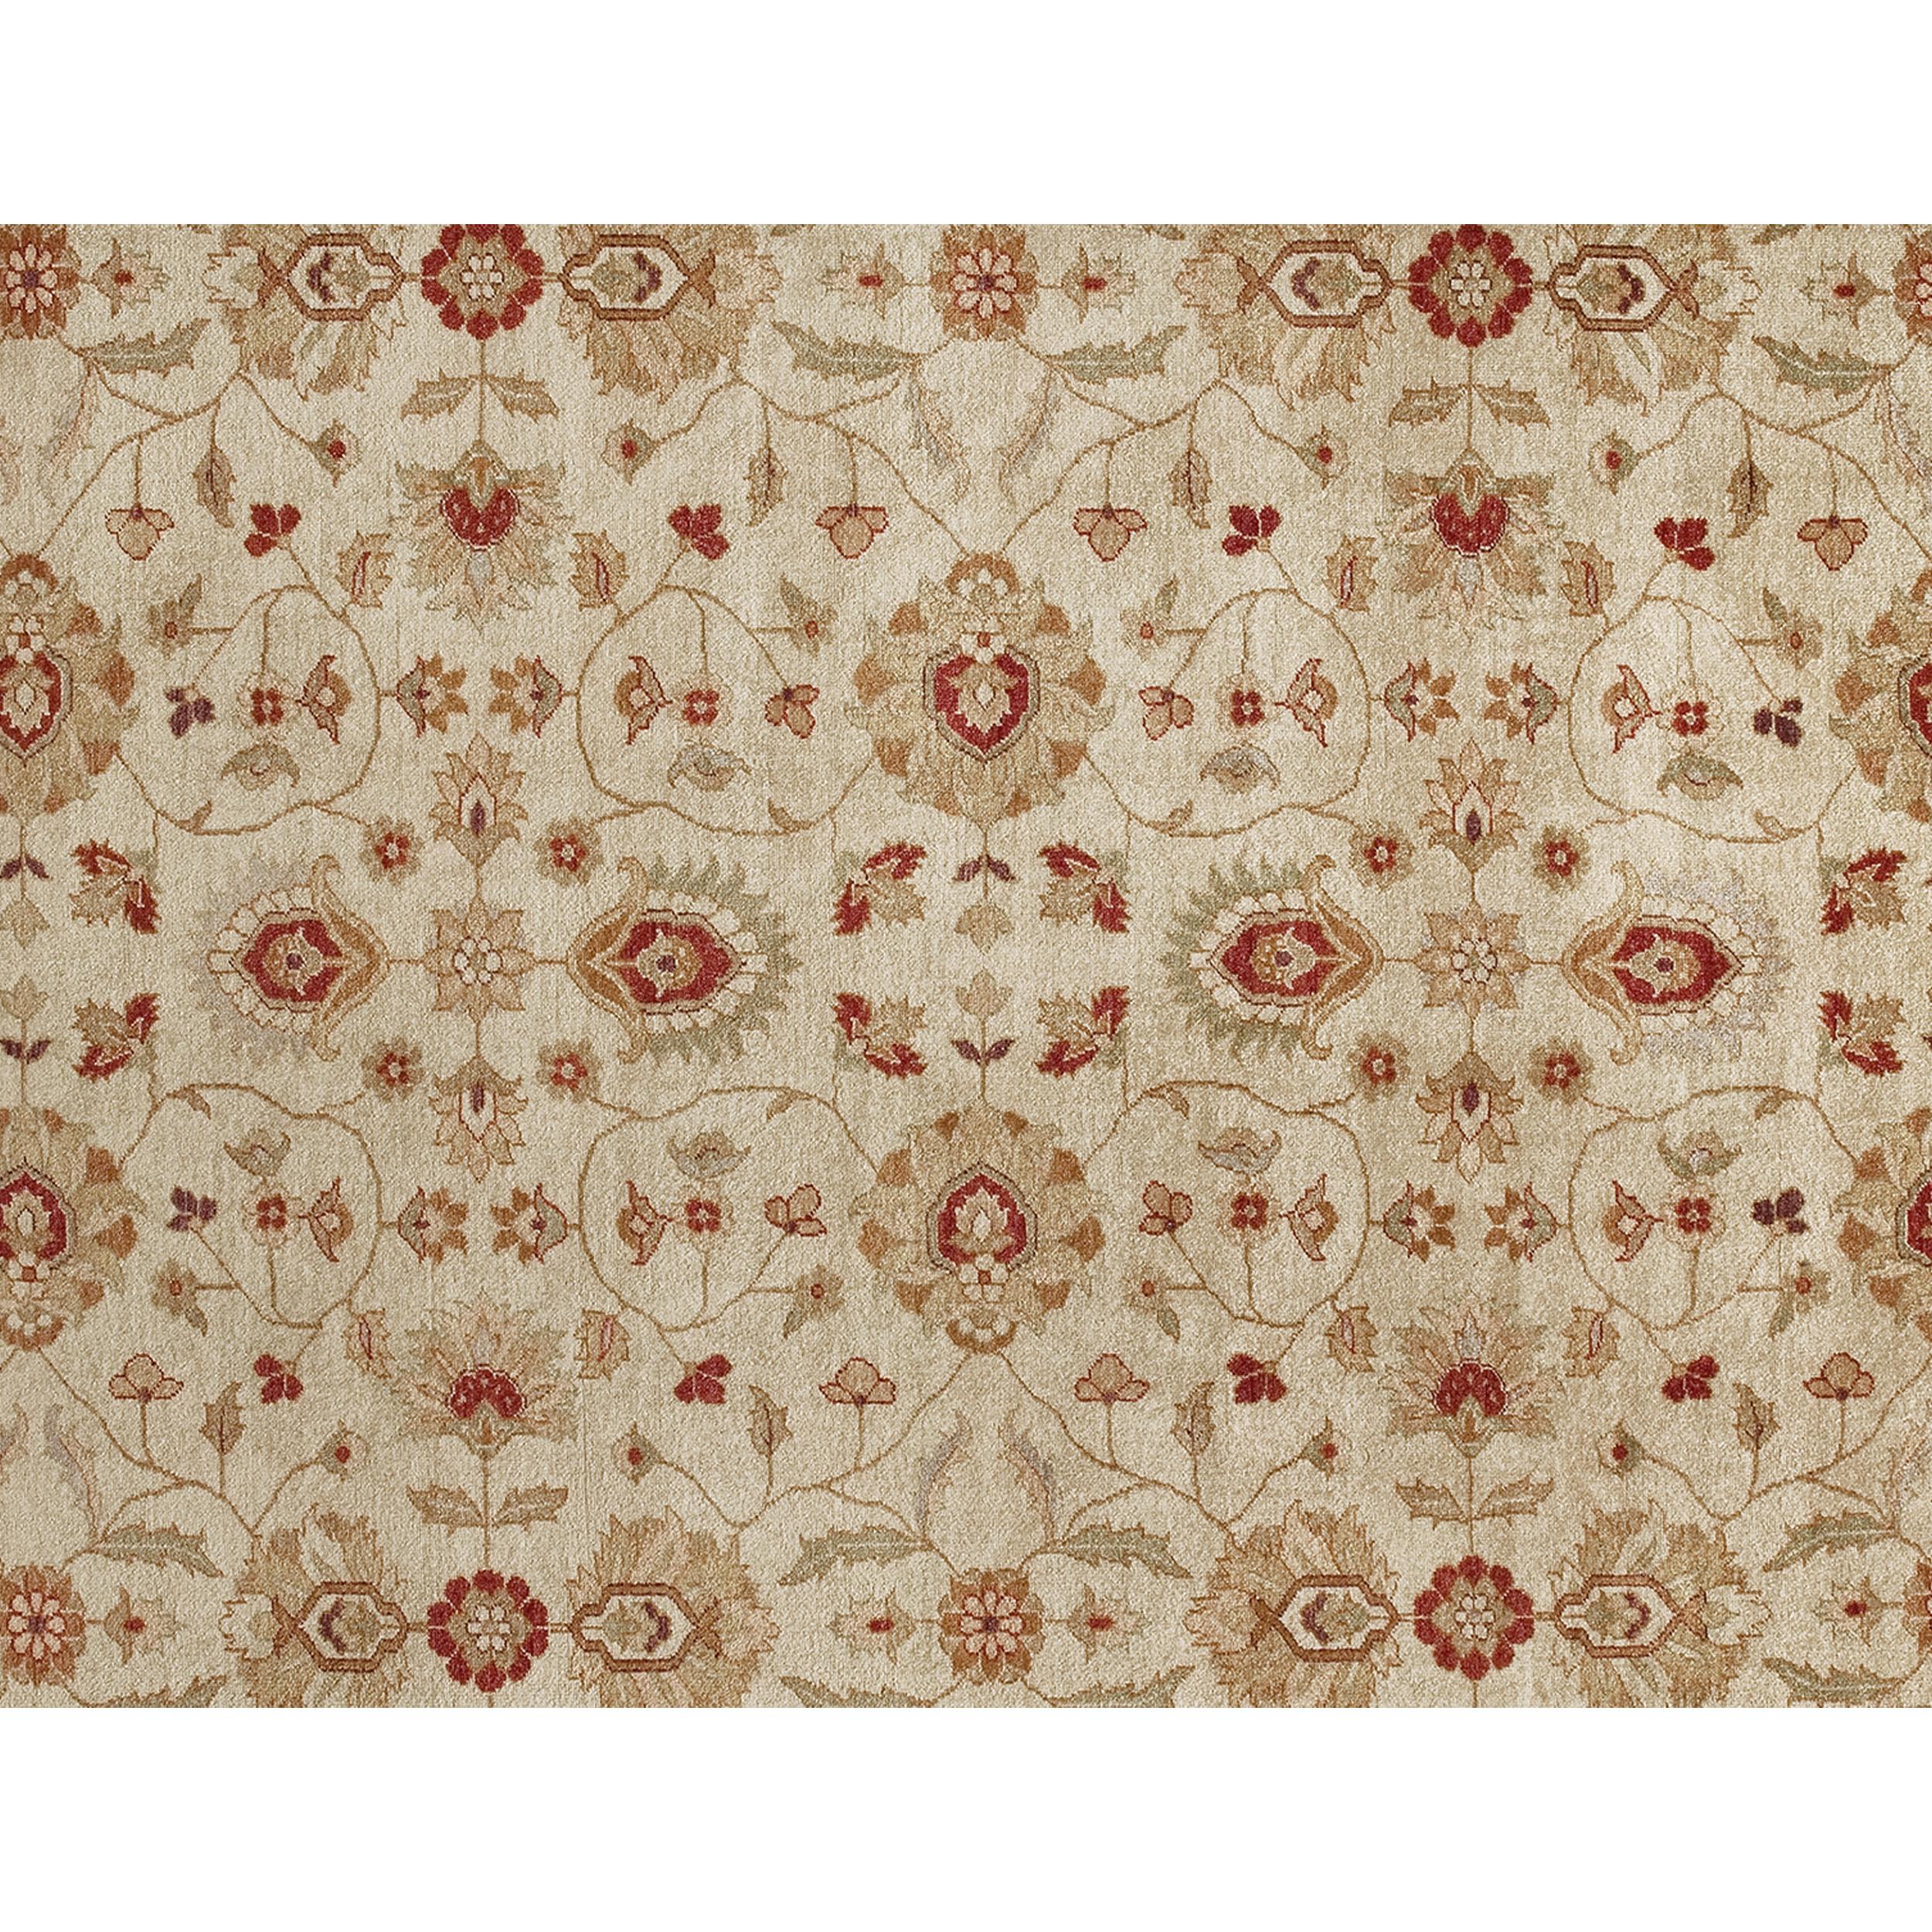 Traditioneller handgeknüpfter Lilihan-Teppich in Creme und Rot in Luxury 11x18, Traditional (Agra) im Angebot